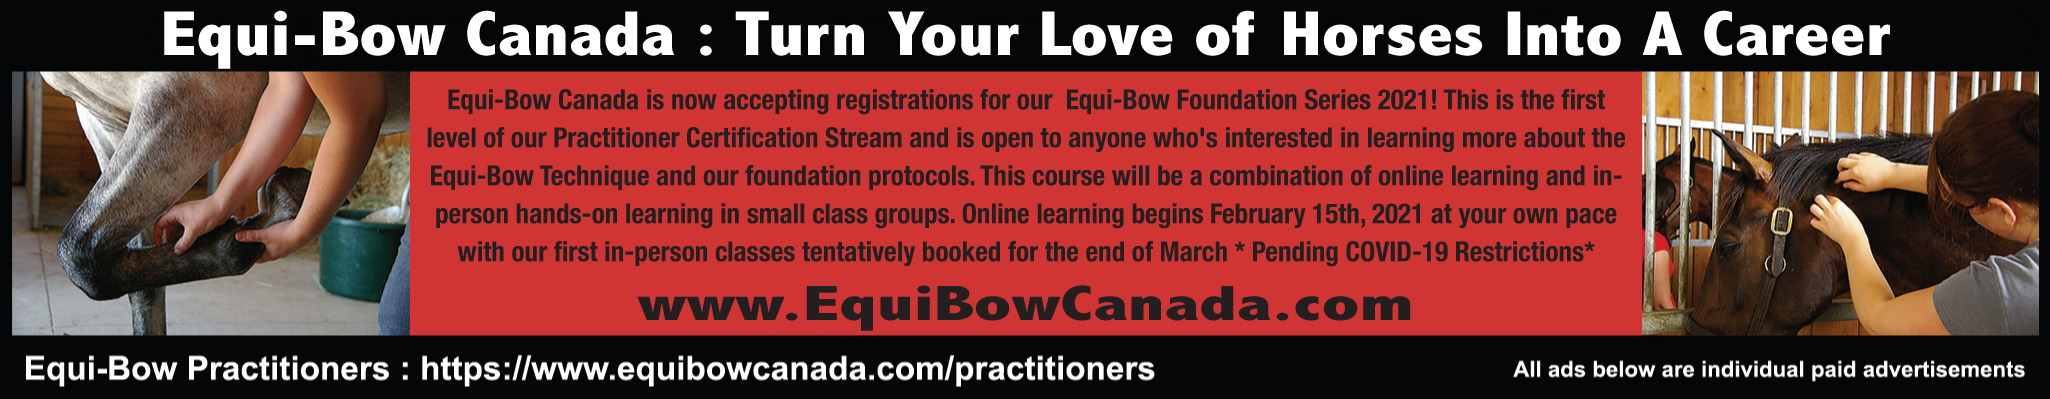 Equi-Bow Canada